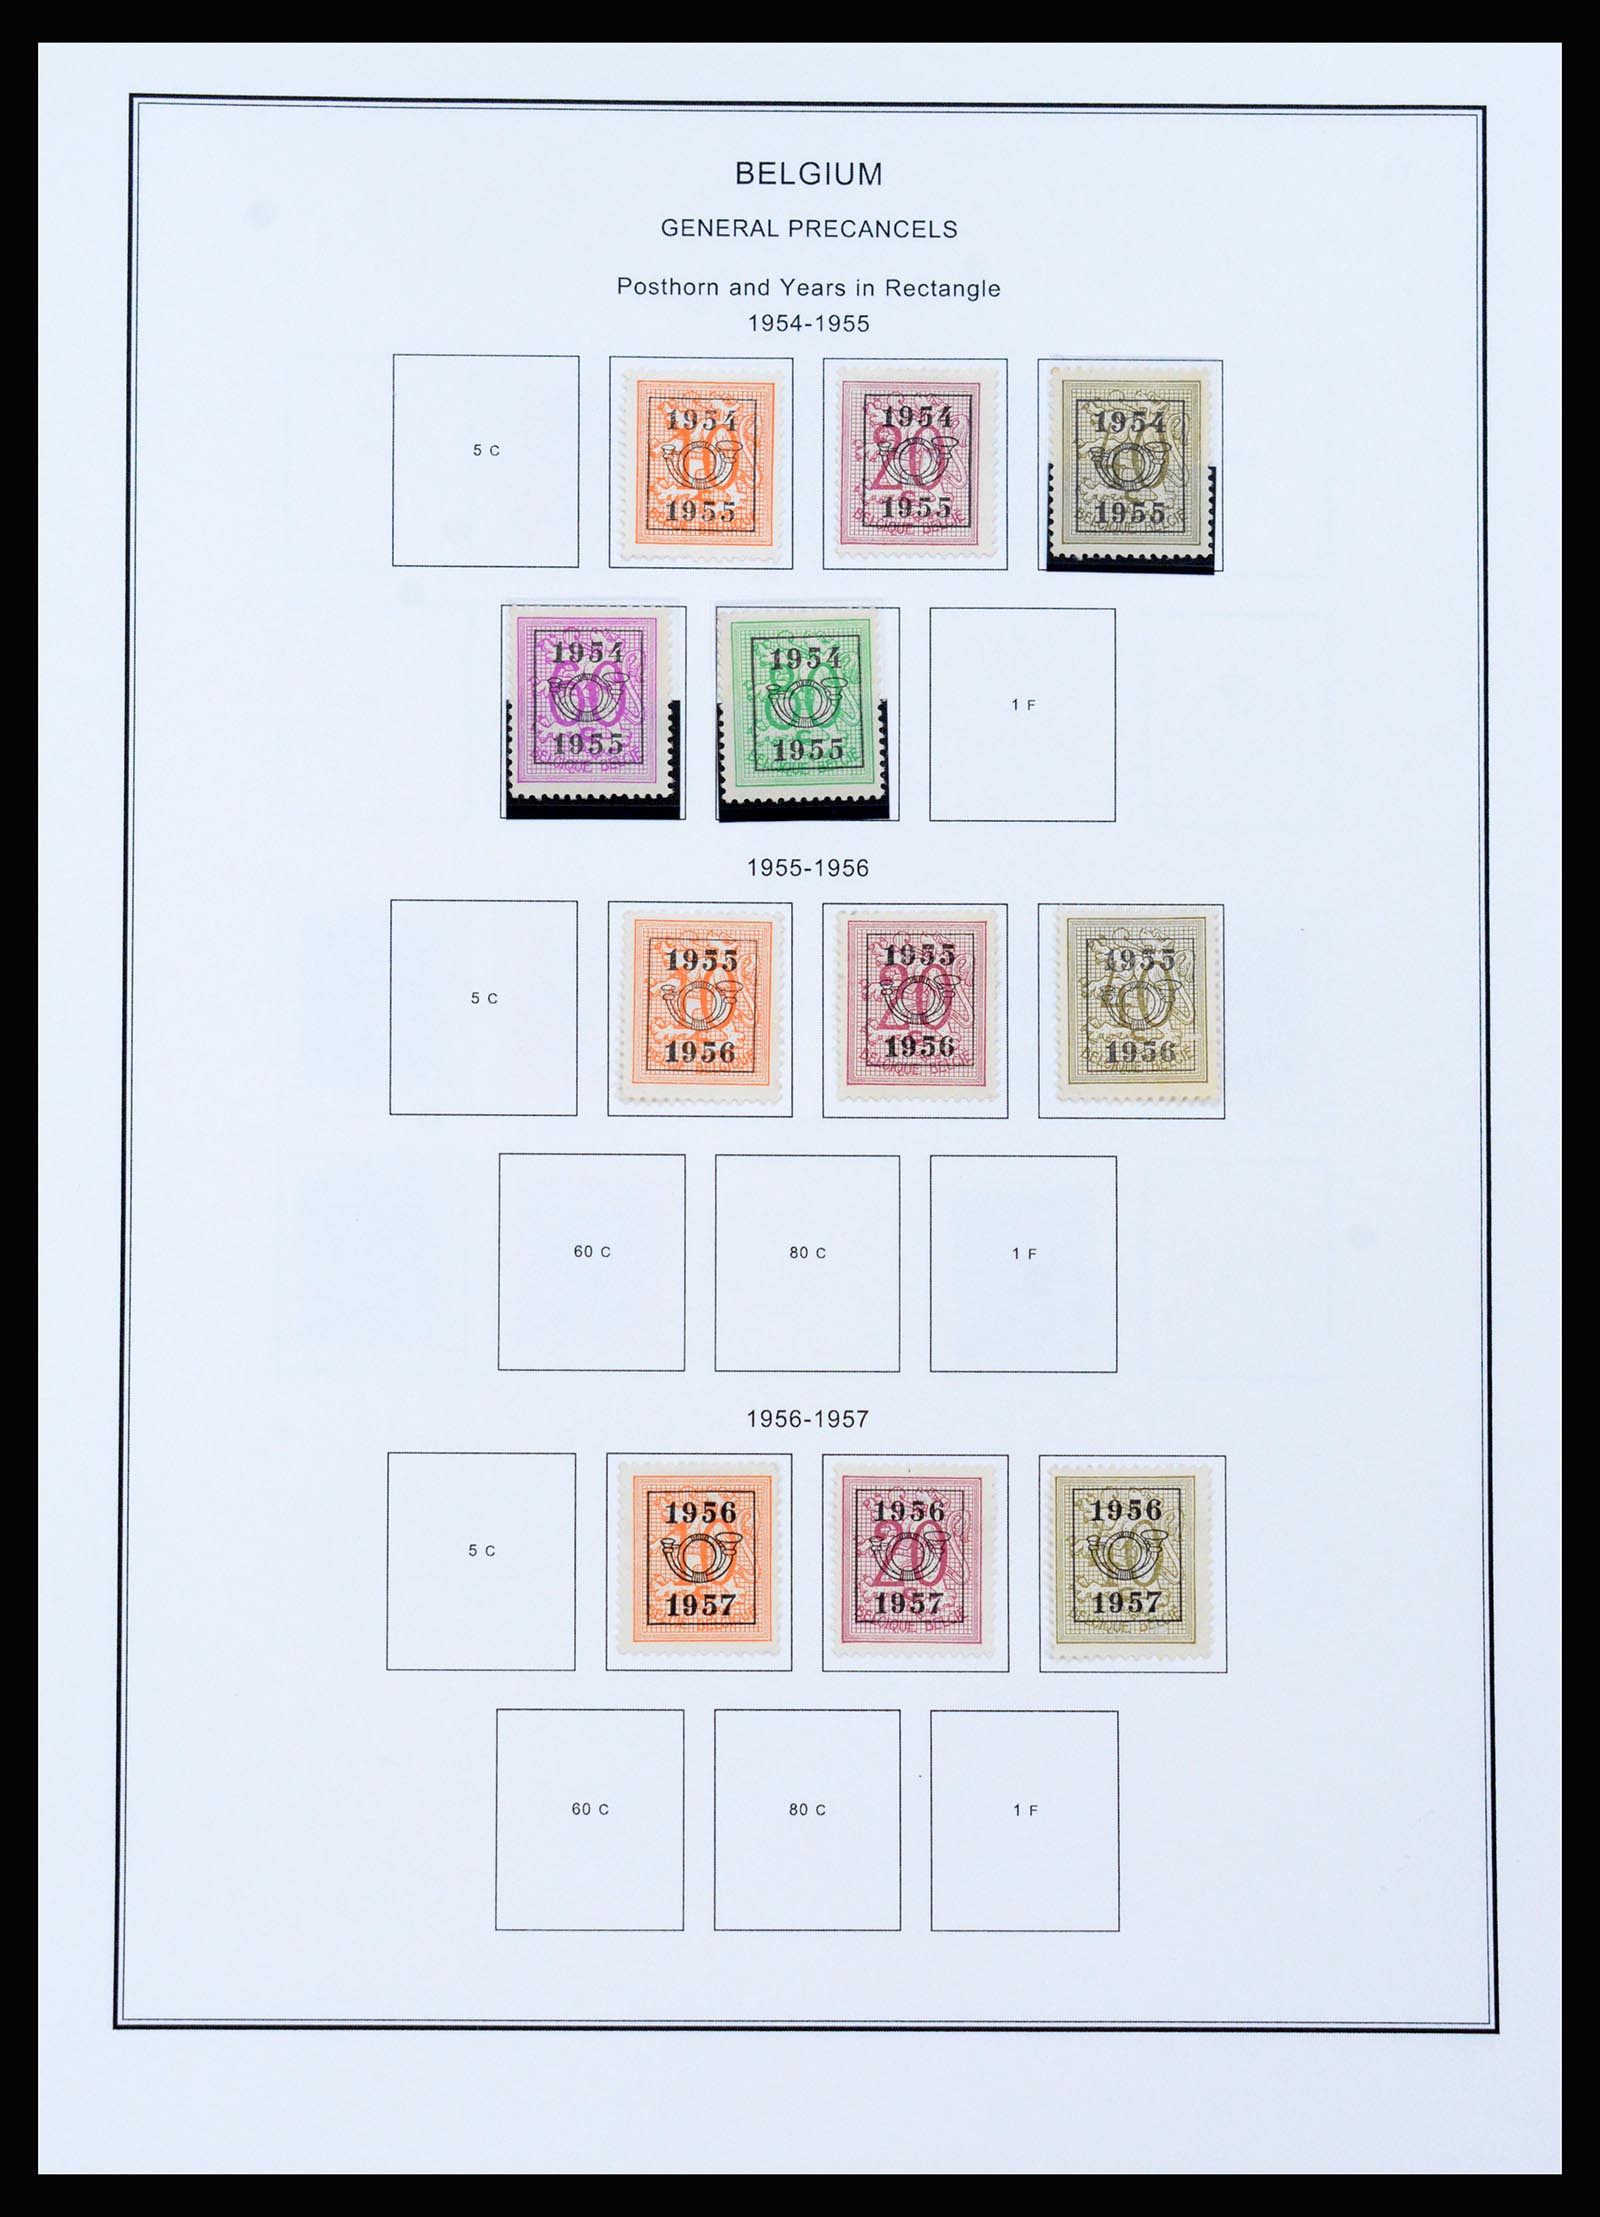 37240 388 - Stamp collection 37240 Belgium 1849-1996.